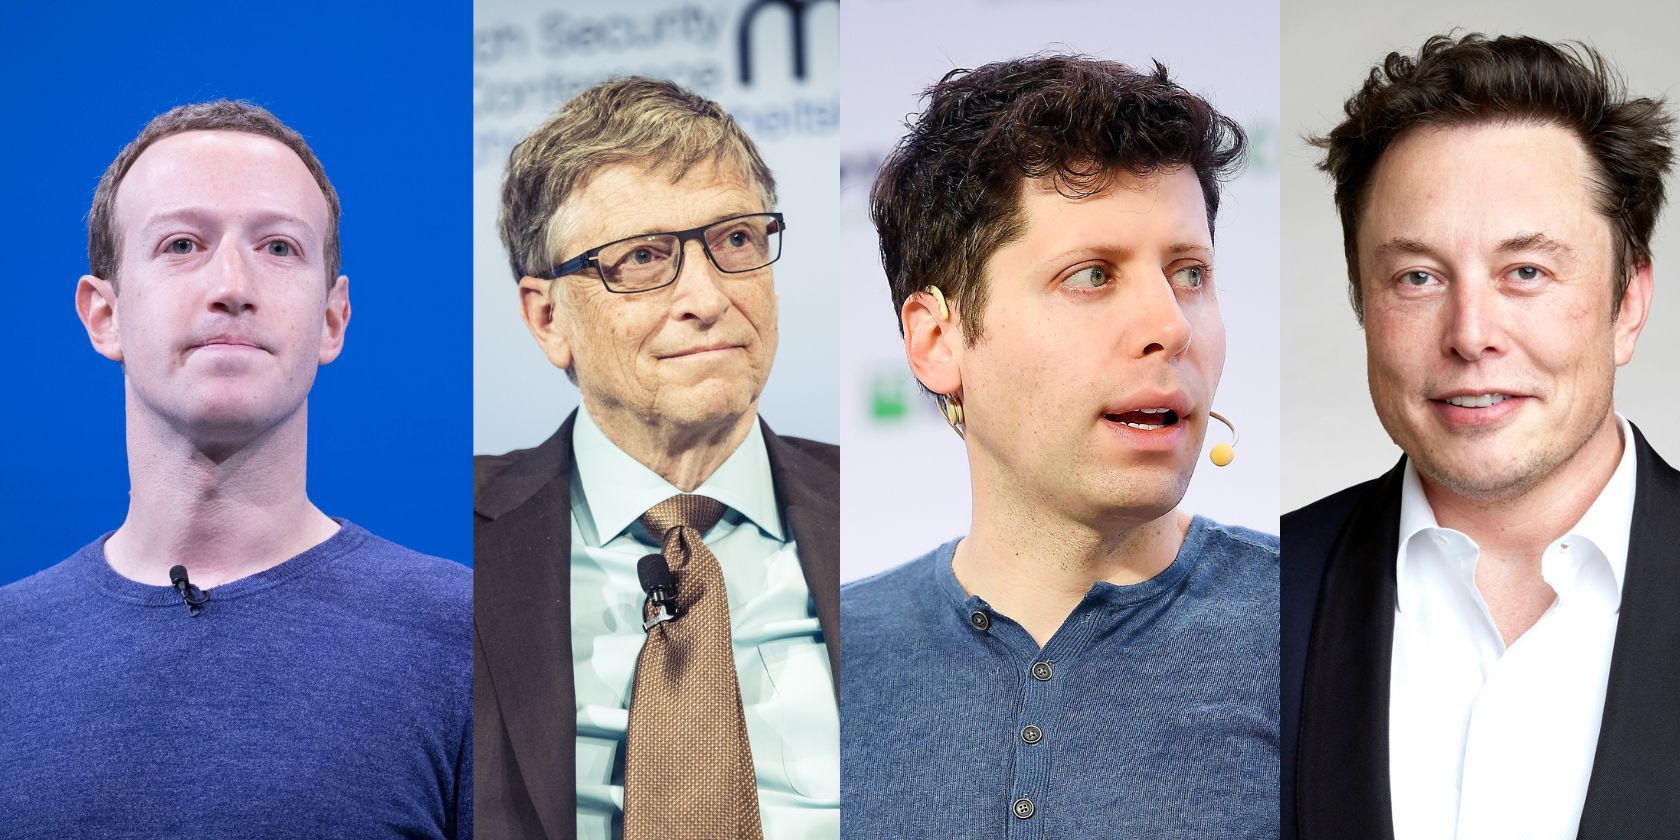 From Left to Right: Mark Zuckerberg, Bill Gates, Sam Altman, and Elon Musk